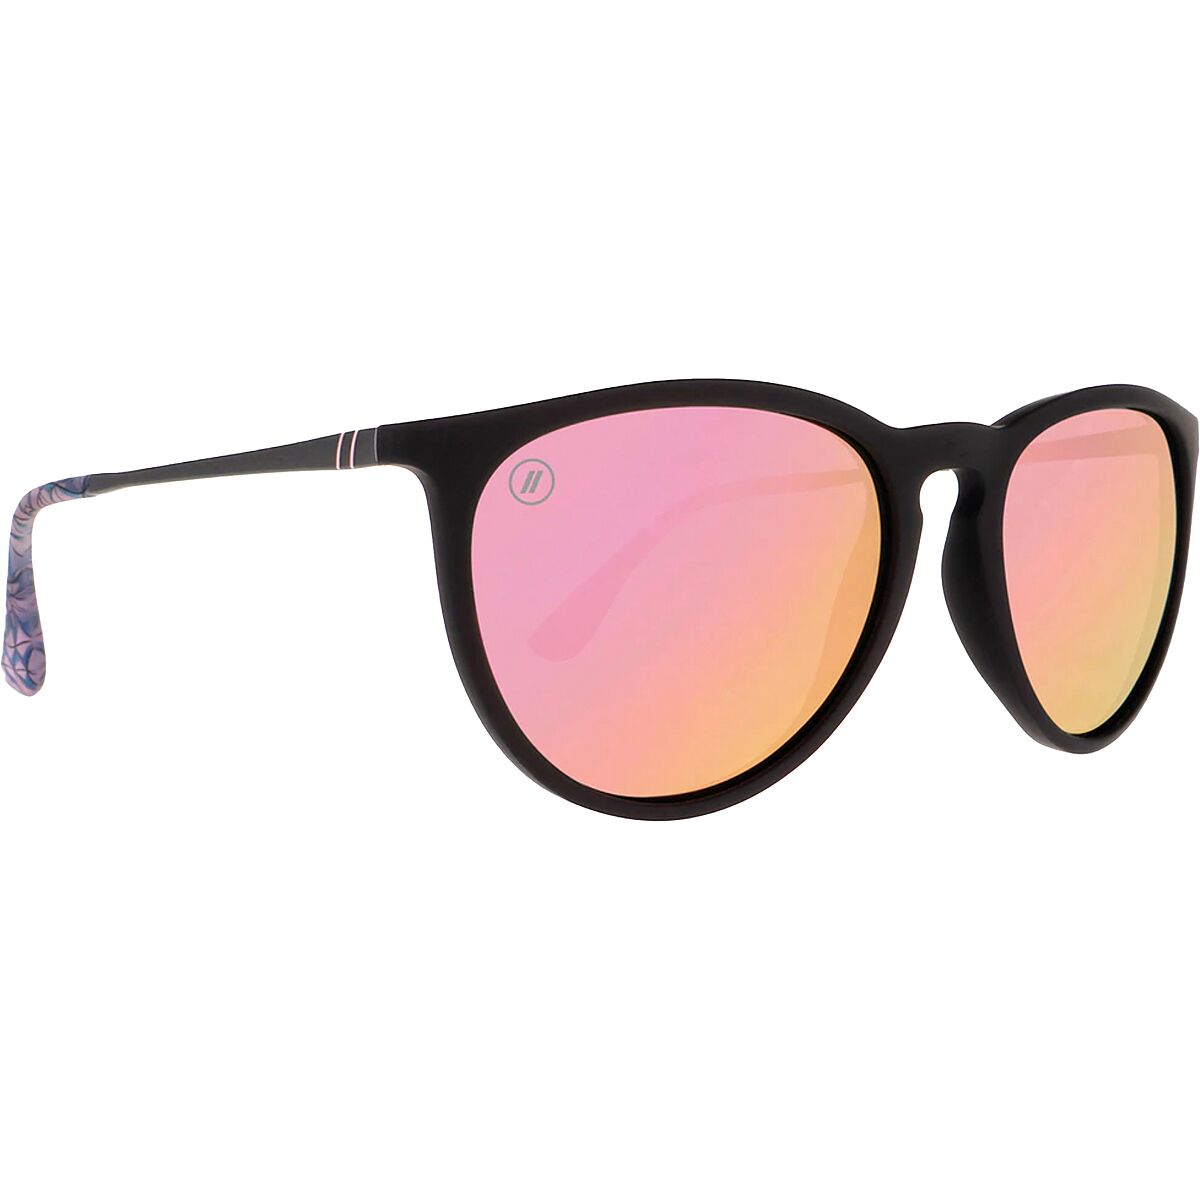 Blenders Eyewear Morgan Melody North Park Polarized Sunglasses - Women's